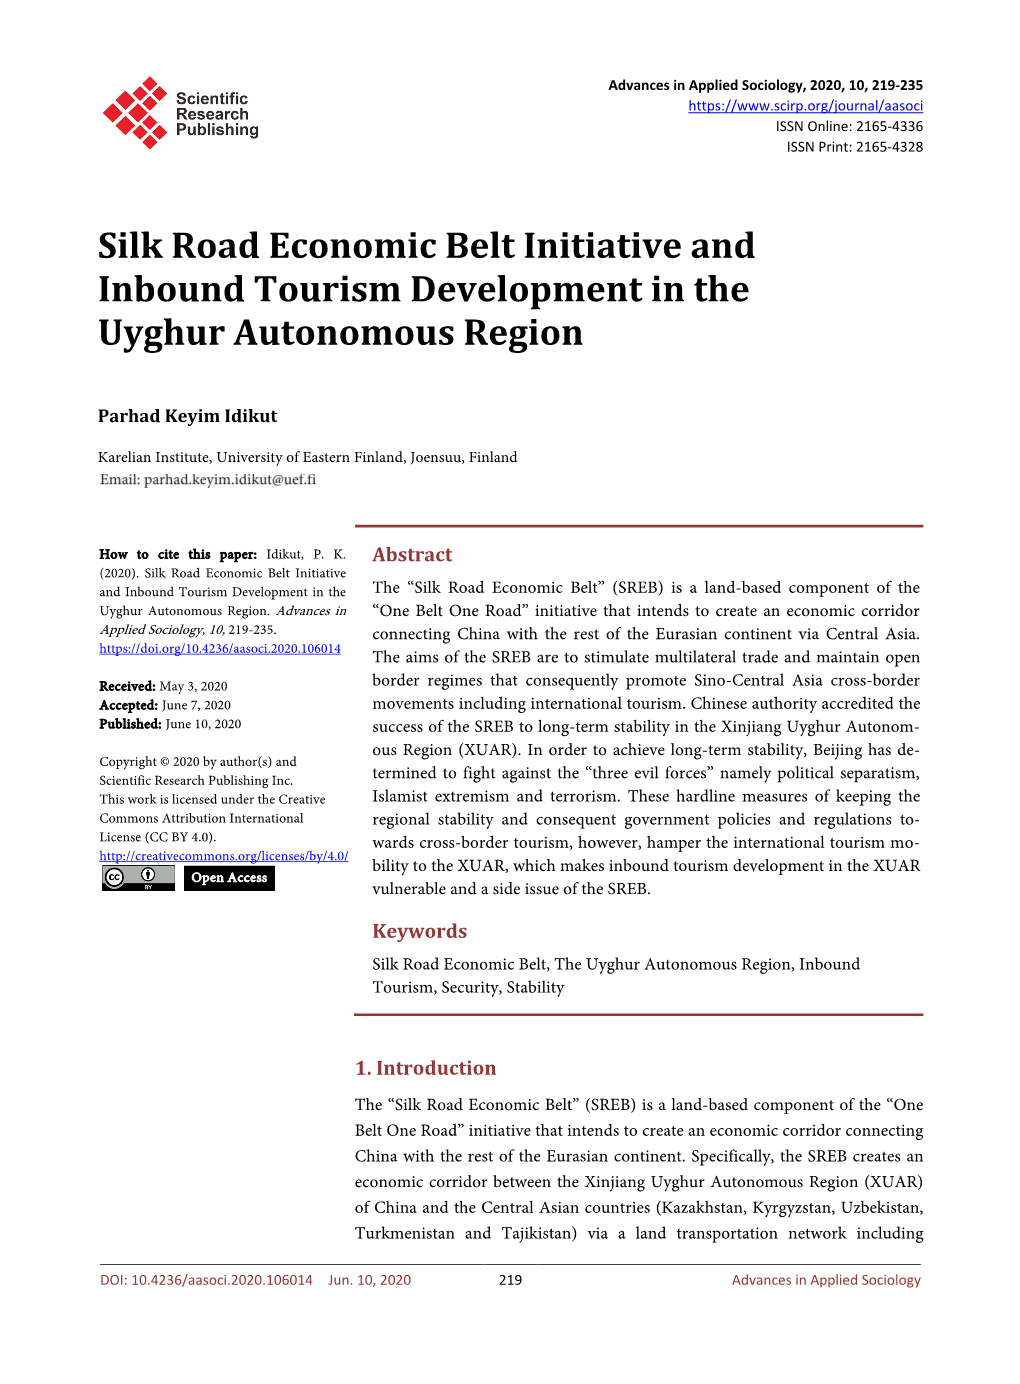 Silk Road Economic Belt Initiative and Inbound Tourism Development in the Uyghur Autonomous Region